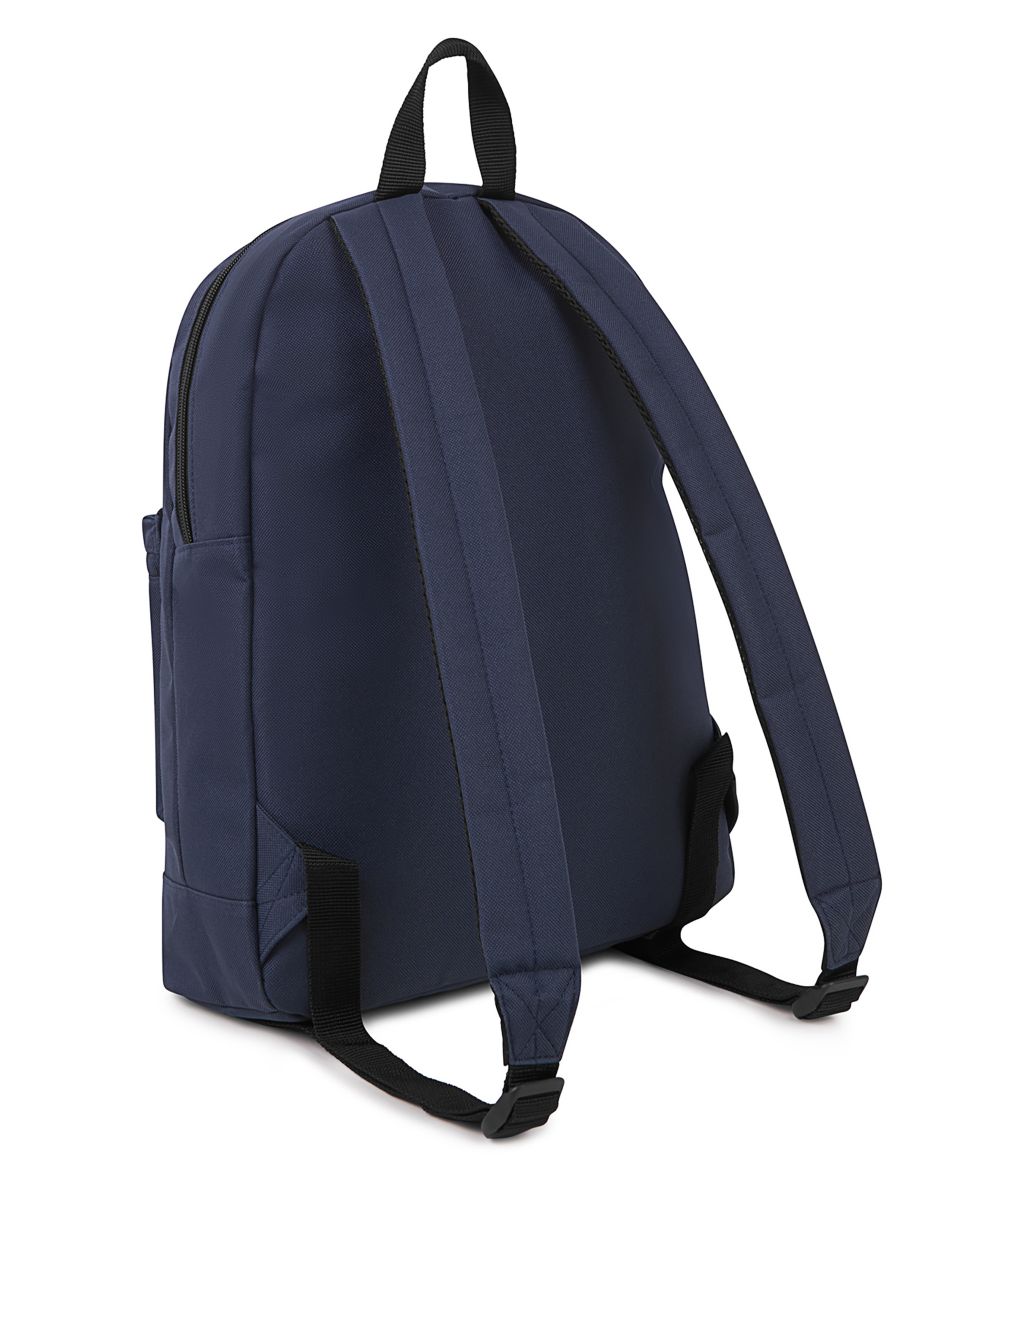 Backpack image 4